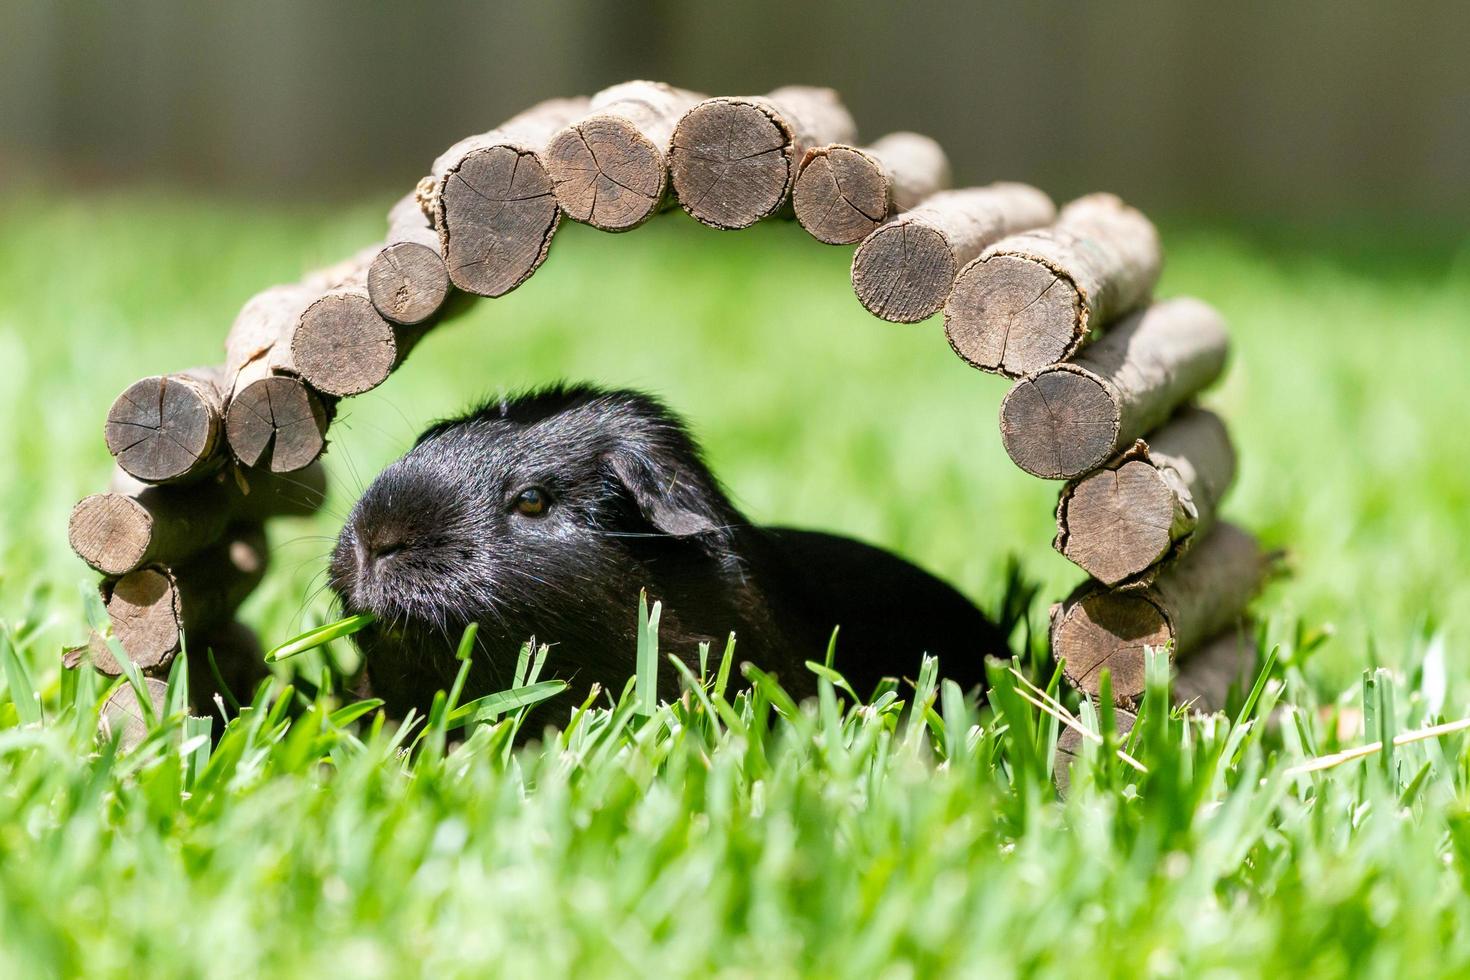 Sydney, Australia, 2020 - Black guinea pig under a wooden arch photo